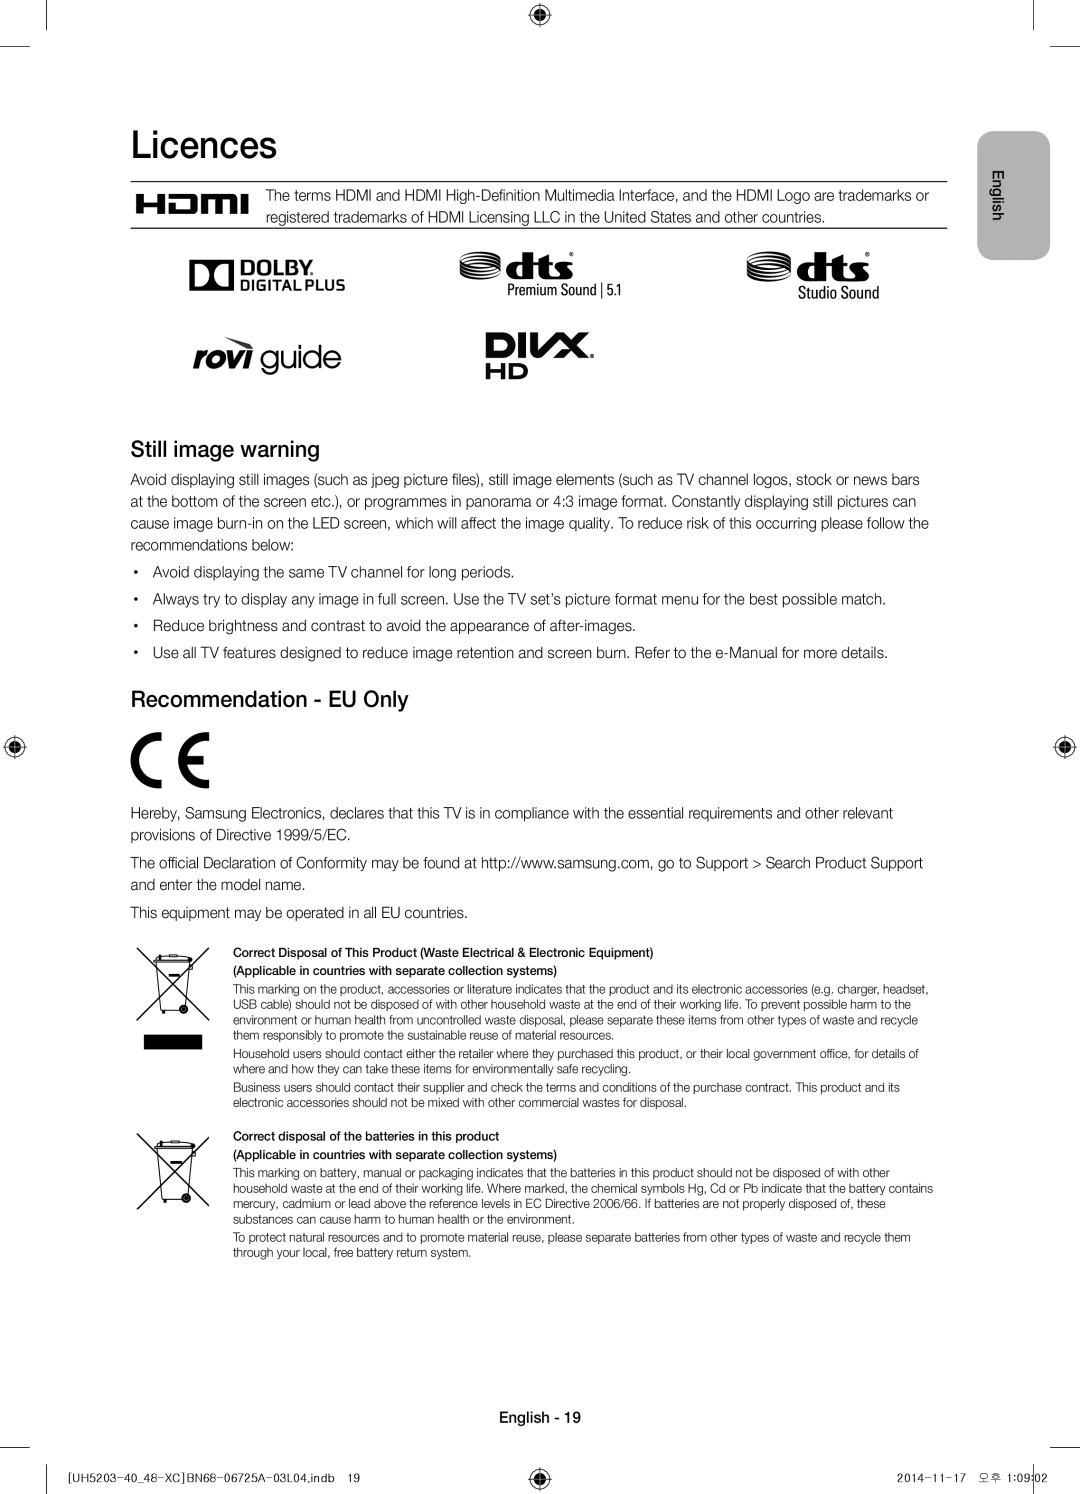 Samsung UE48H5203AWXXC, UE40H5203AWXXC manual Licences, Still image warning, Recommendation - EU Only, English 